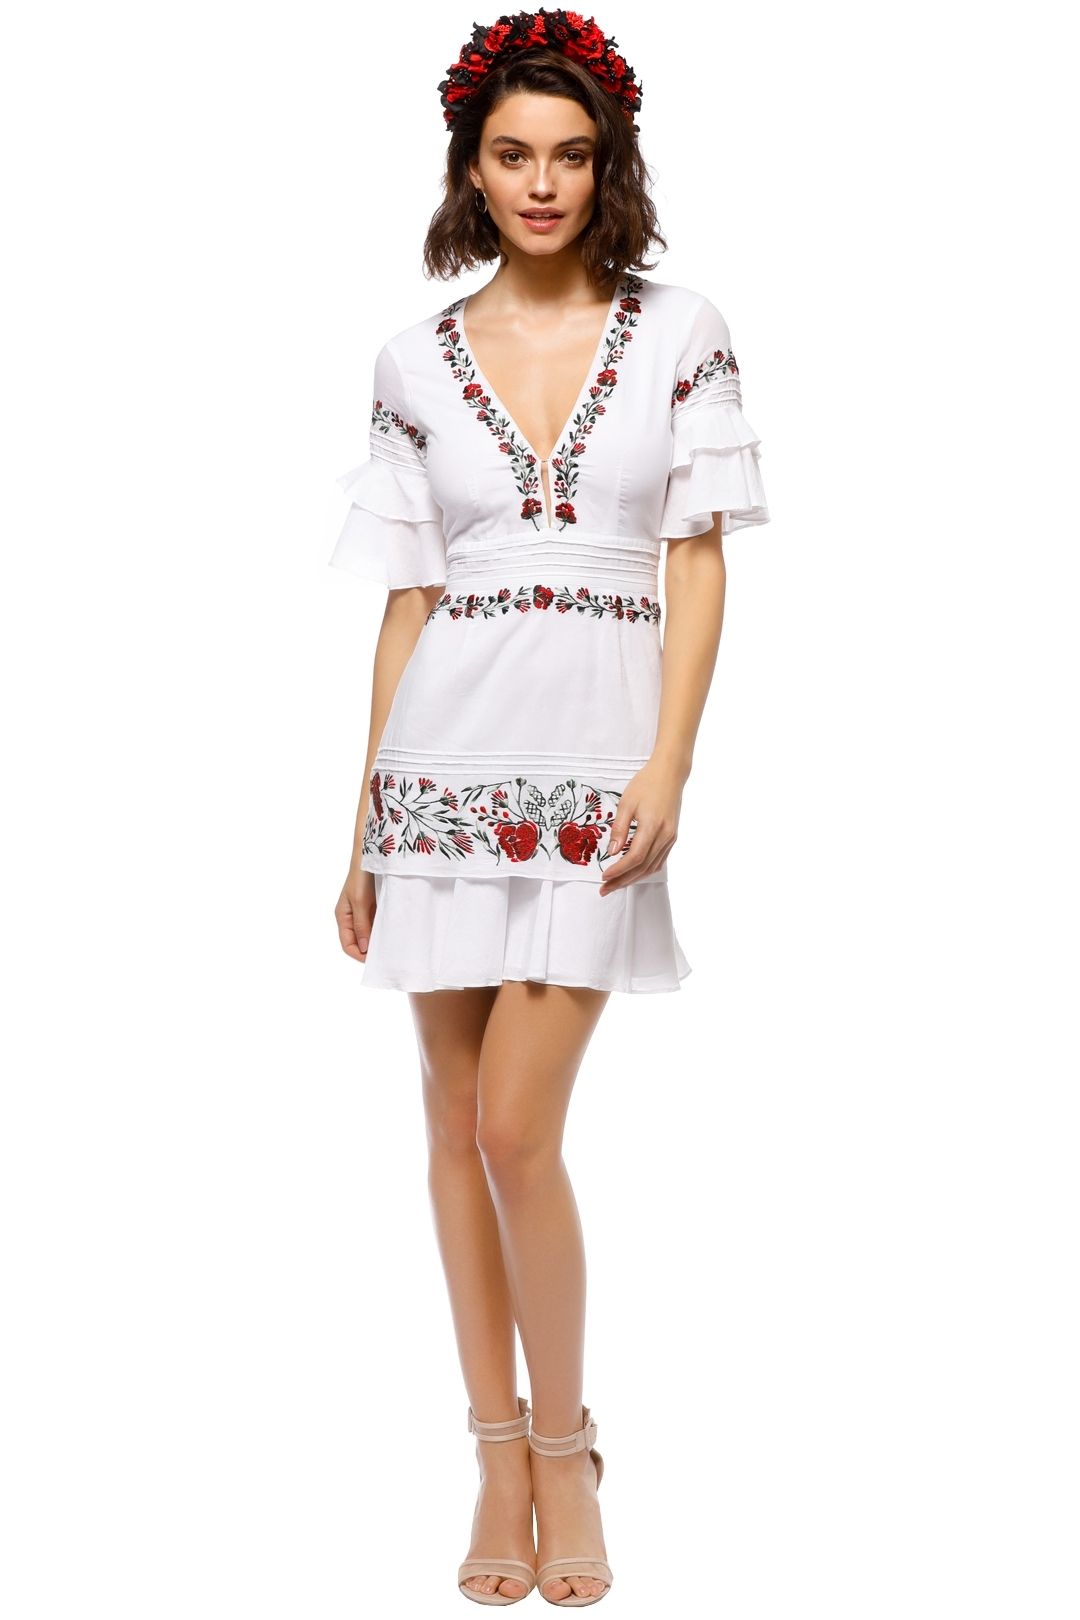 Saylor - Jayne Mini Dress - White - Front